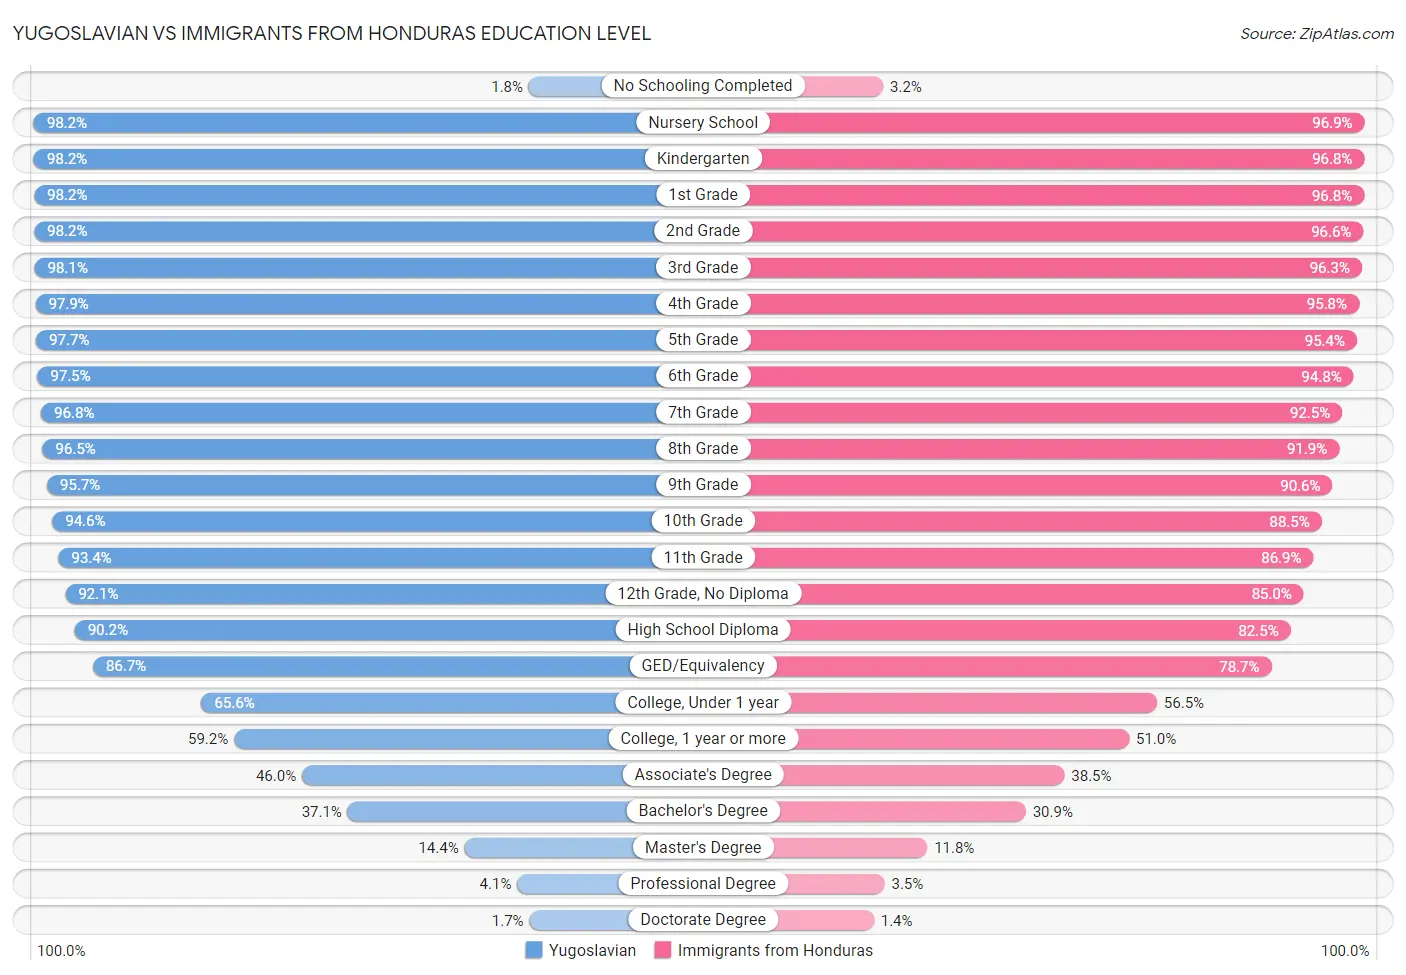 Yugoslavian vs Immigrants from Honduras Education Level